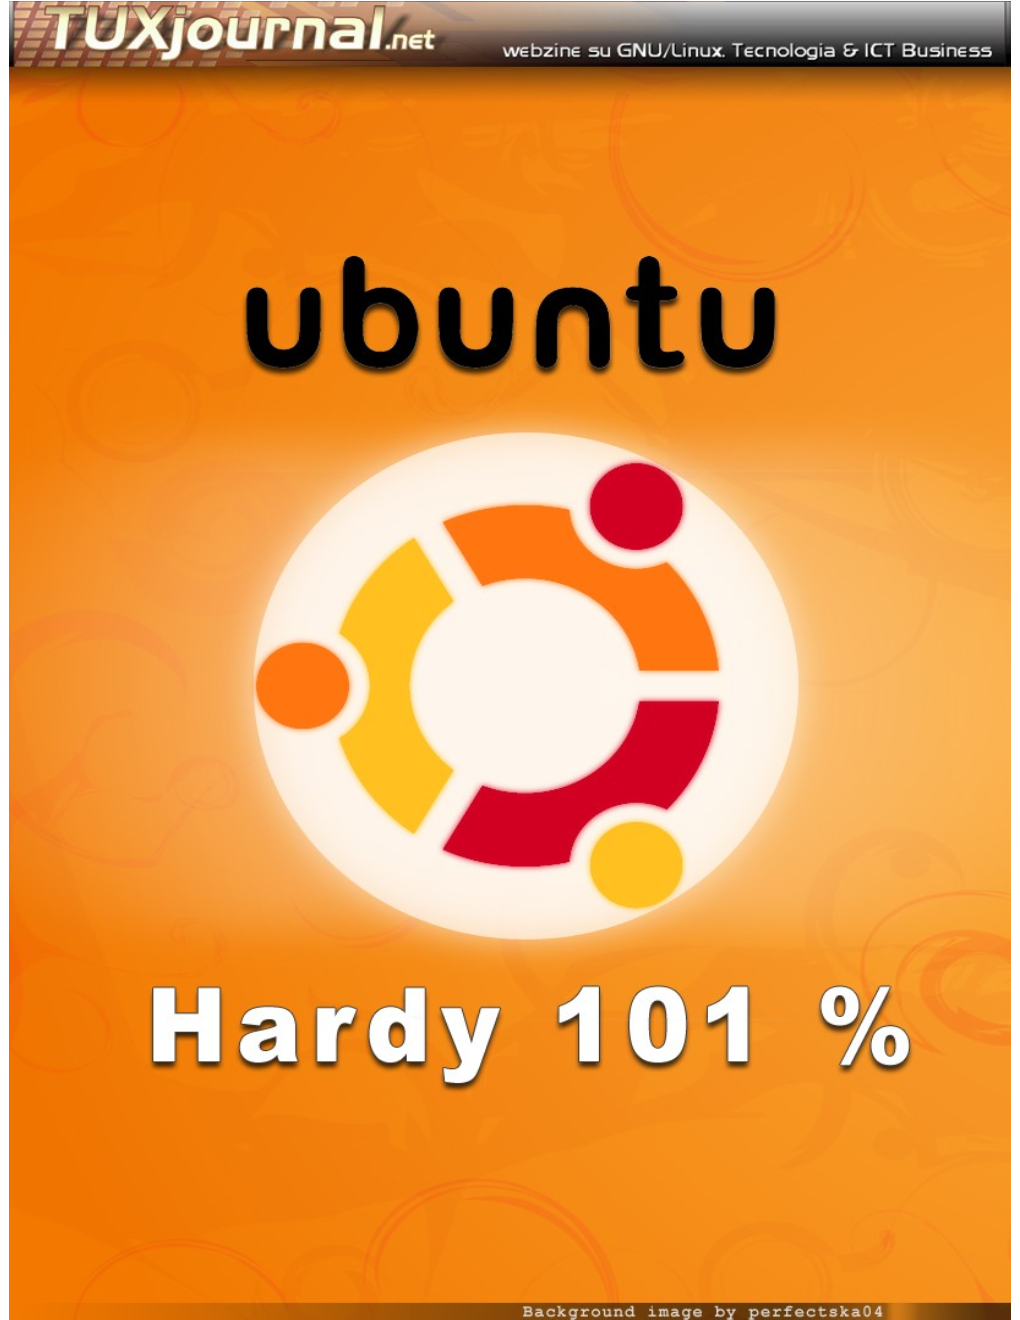 Ubuntu Hardy Al 101%